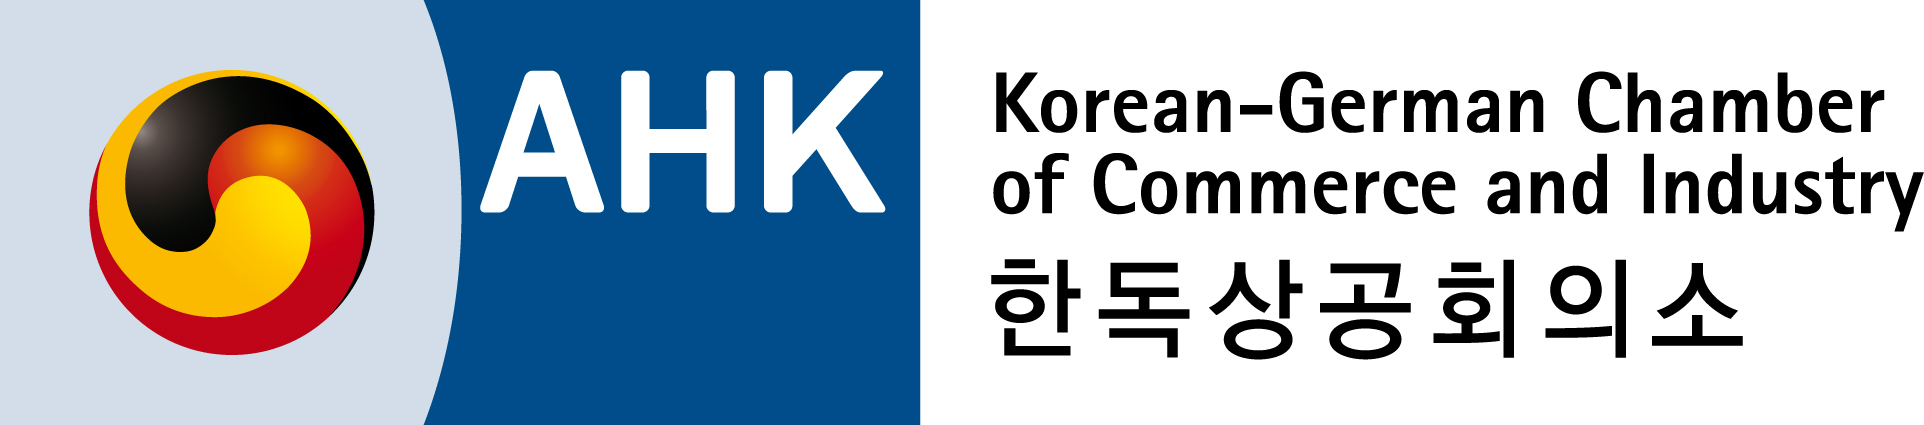 Korean-German Chamber of Commerce and Industry (KGCCI)